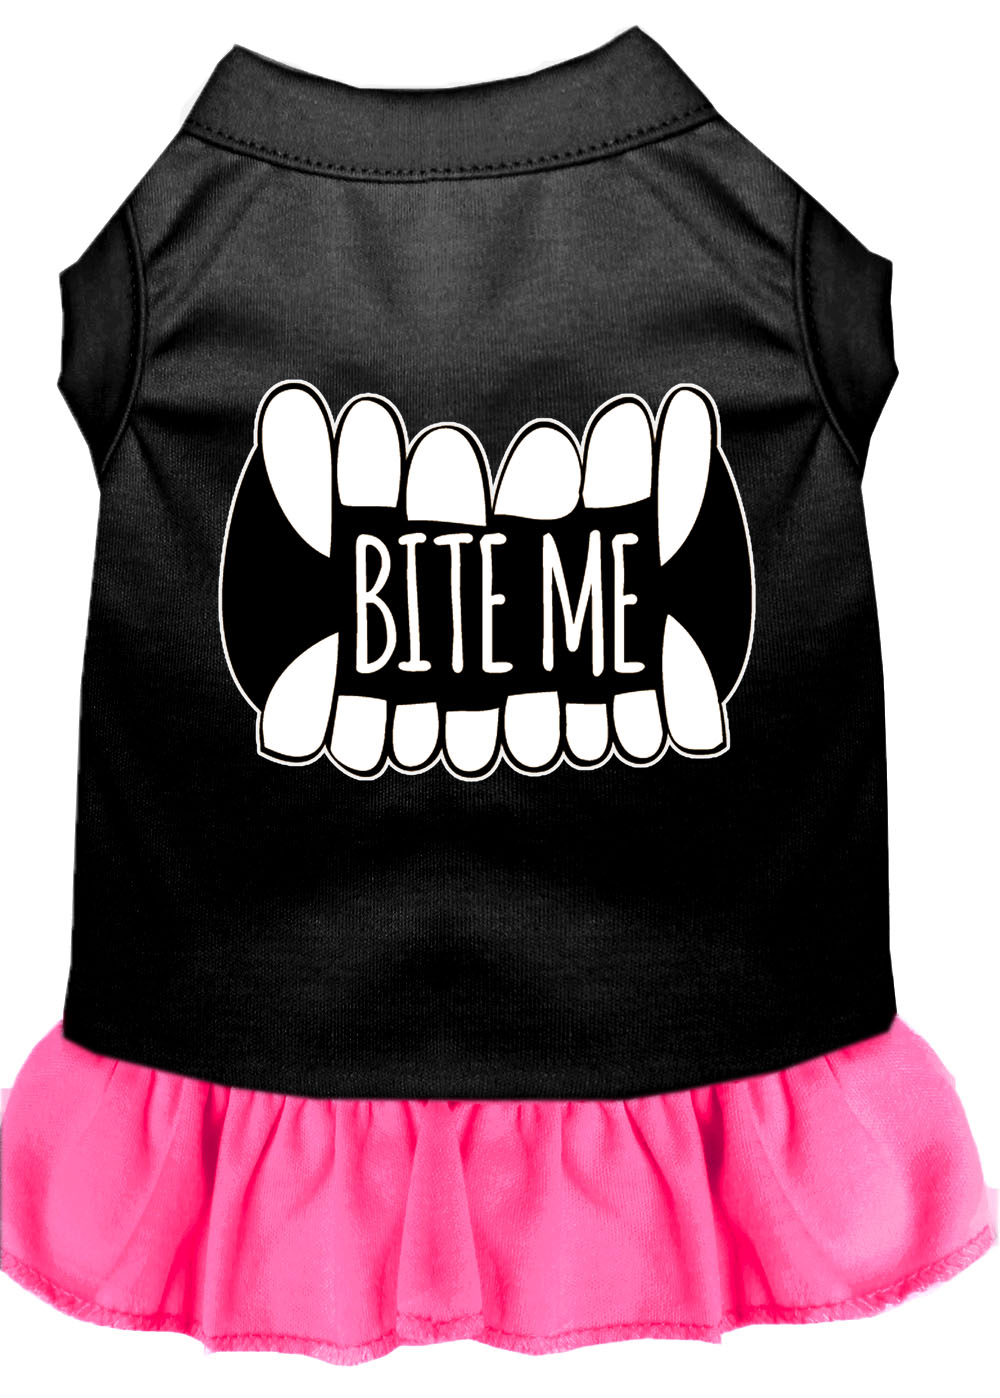 Bite Me Screen Print Dog Dress Black with Bright Pink XXXL